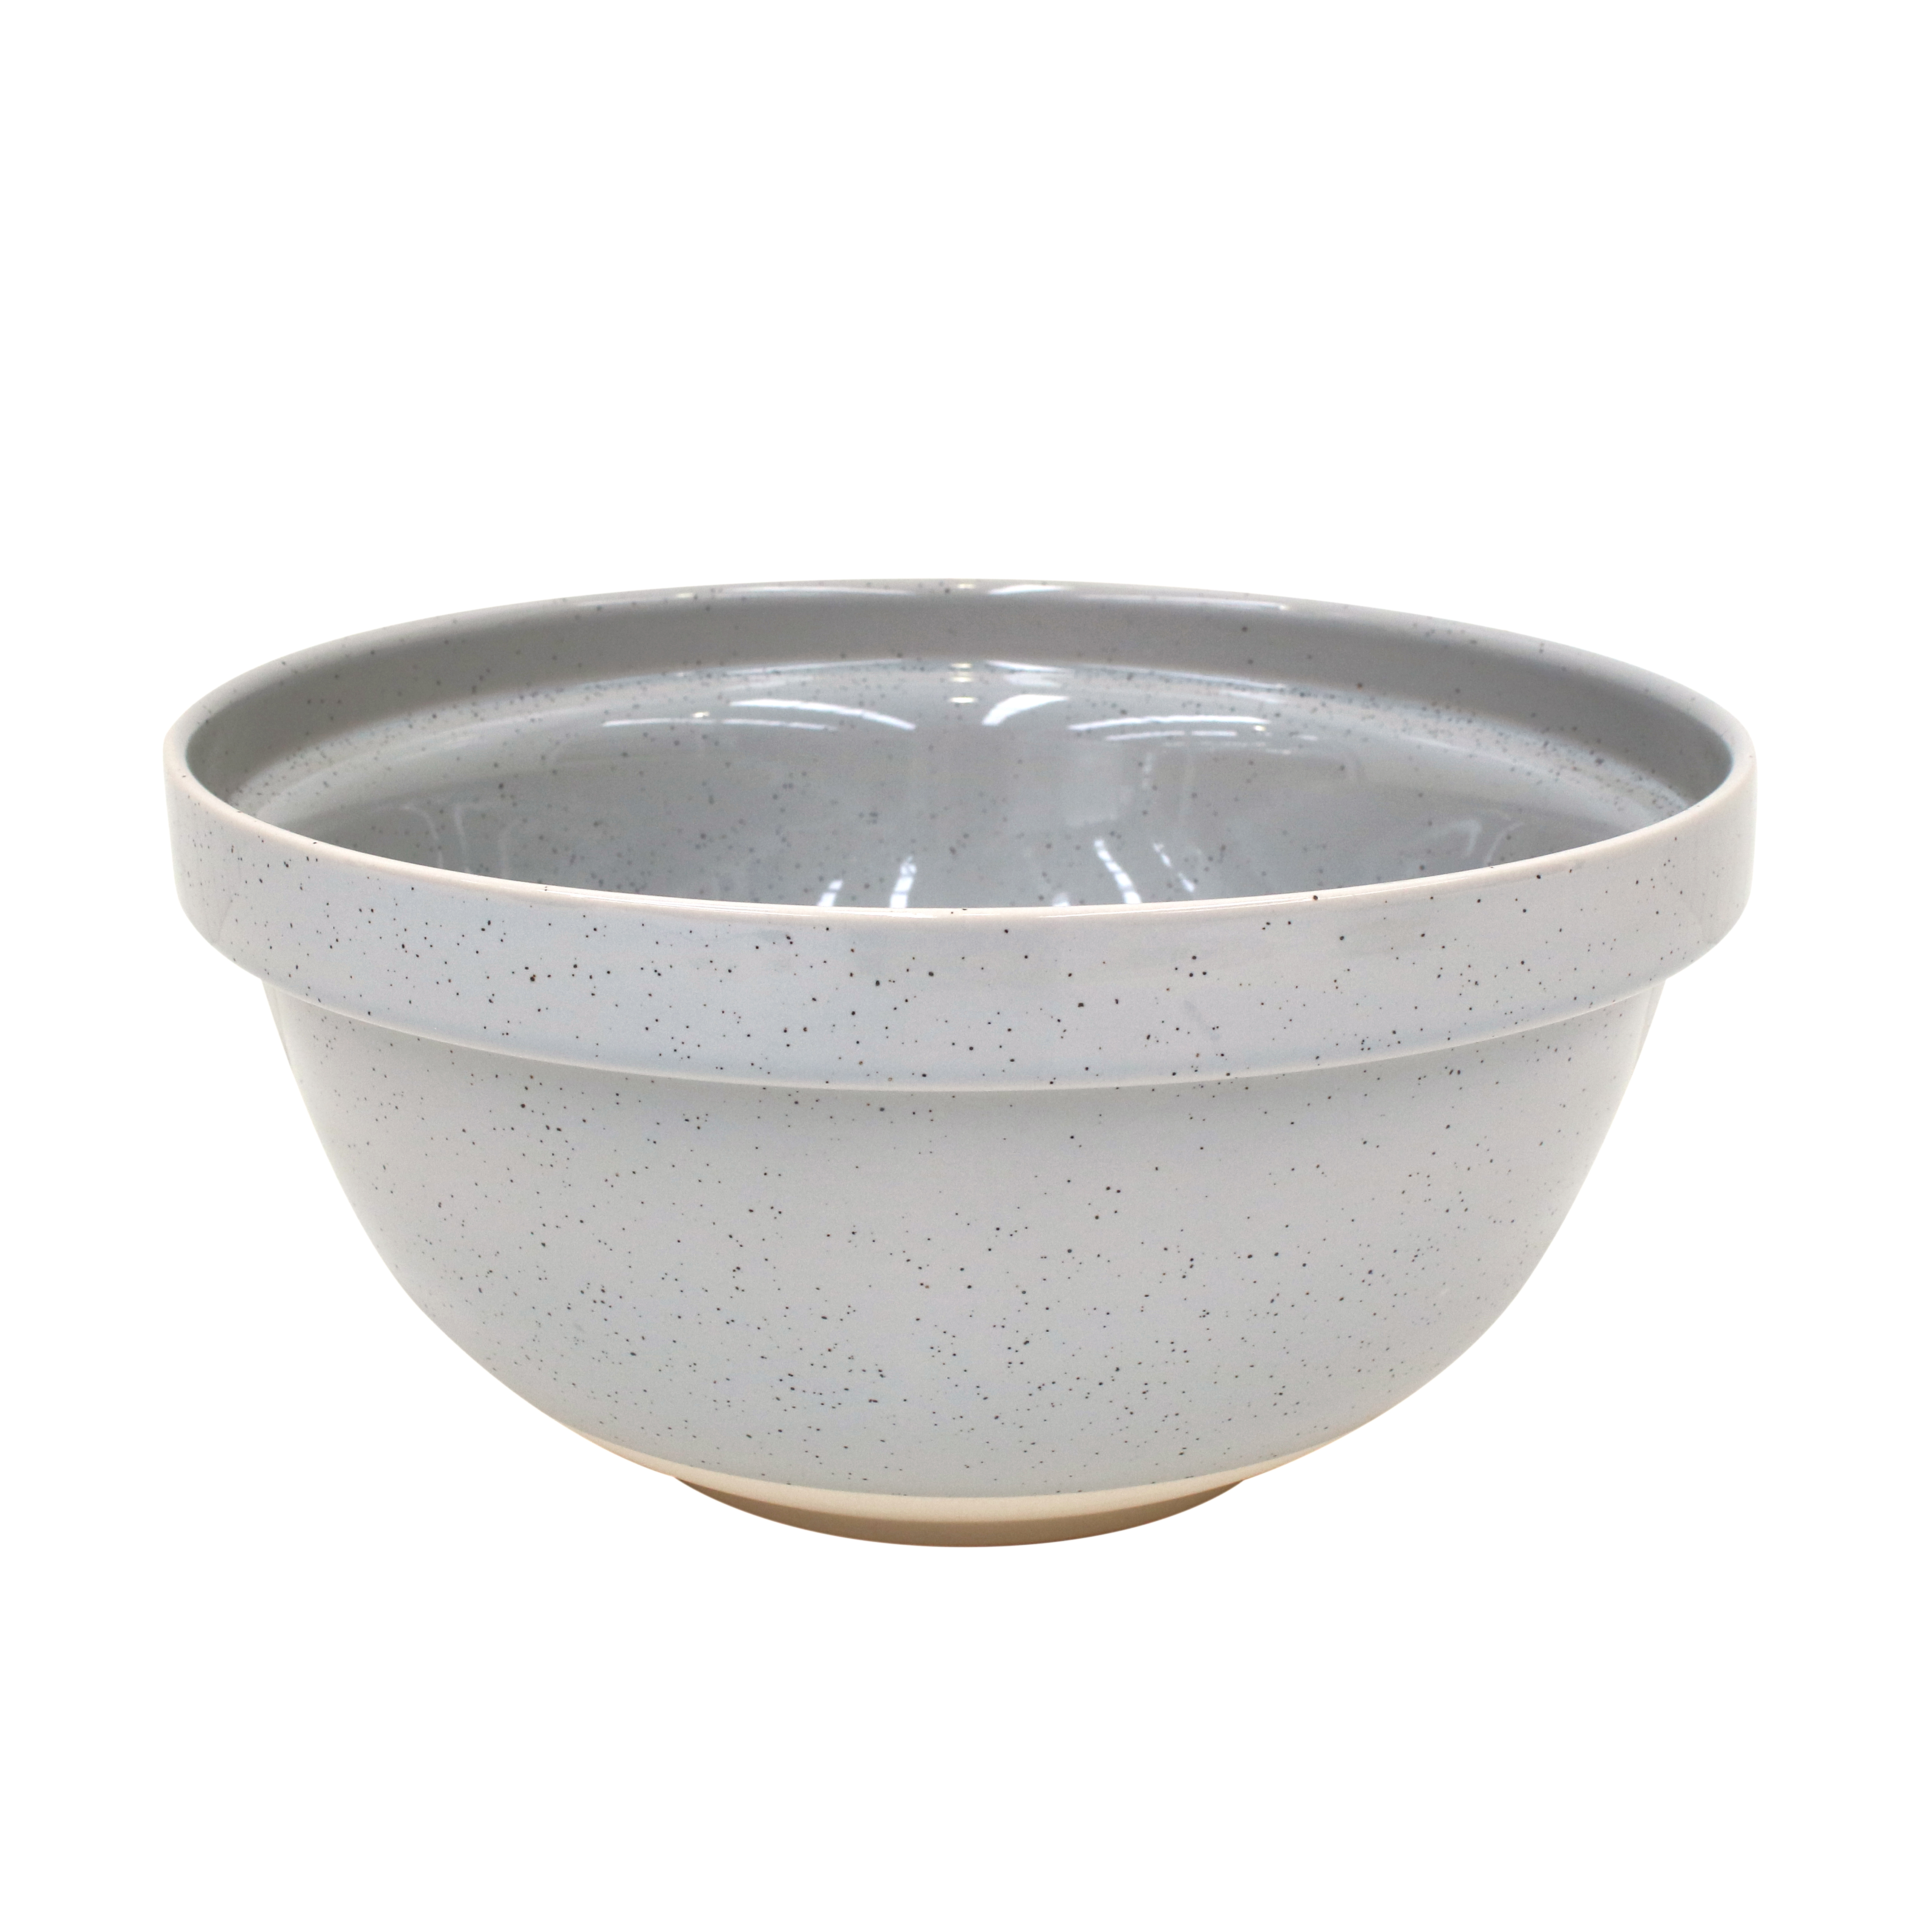 Fattoria Grey Mixing Bowl Lrg 6.24l Gift